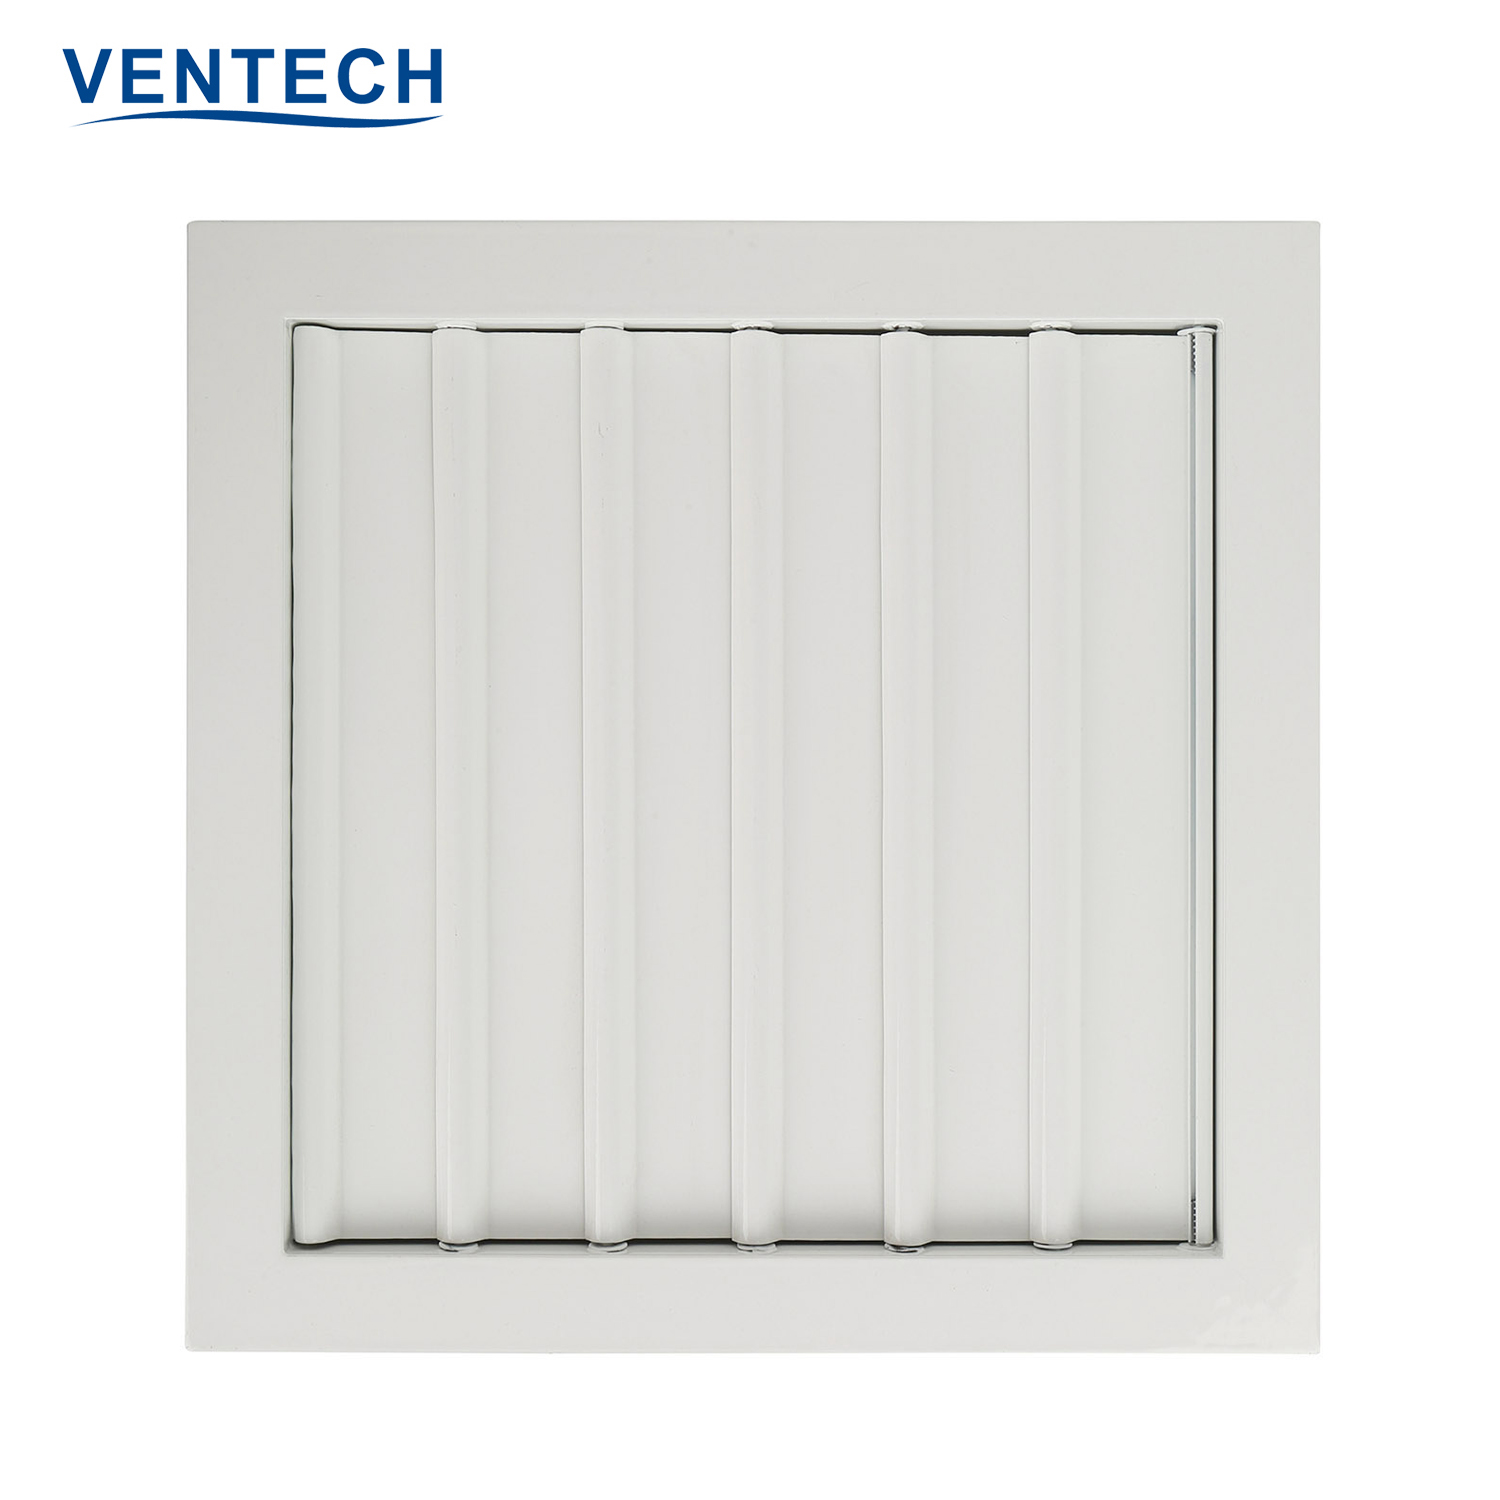 Ventech aluminum ventilation louvers distributor bulk production-2